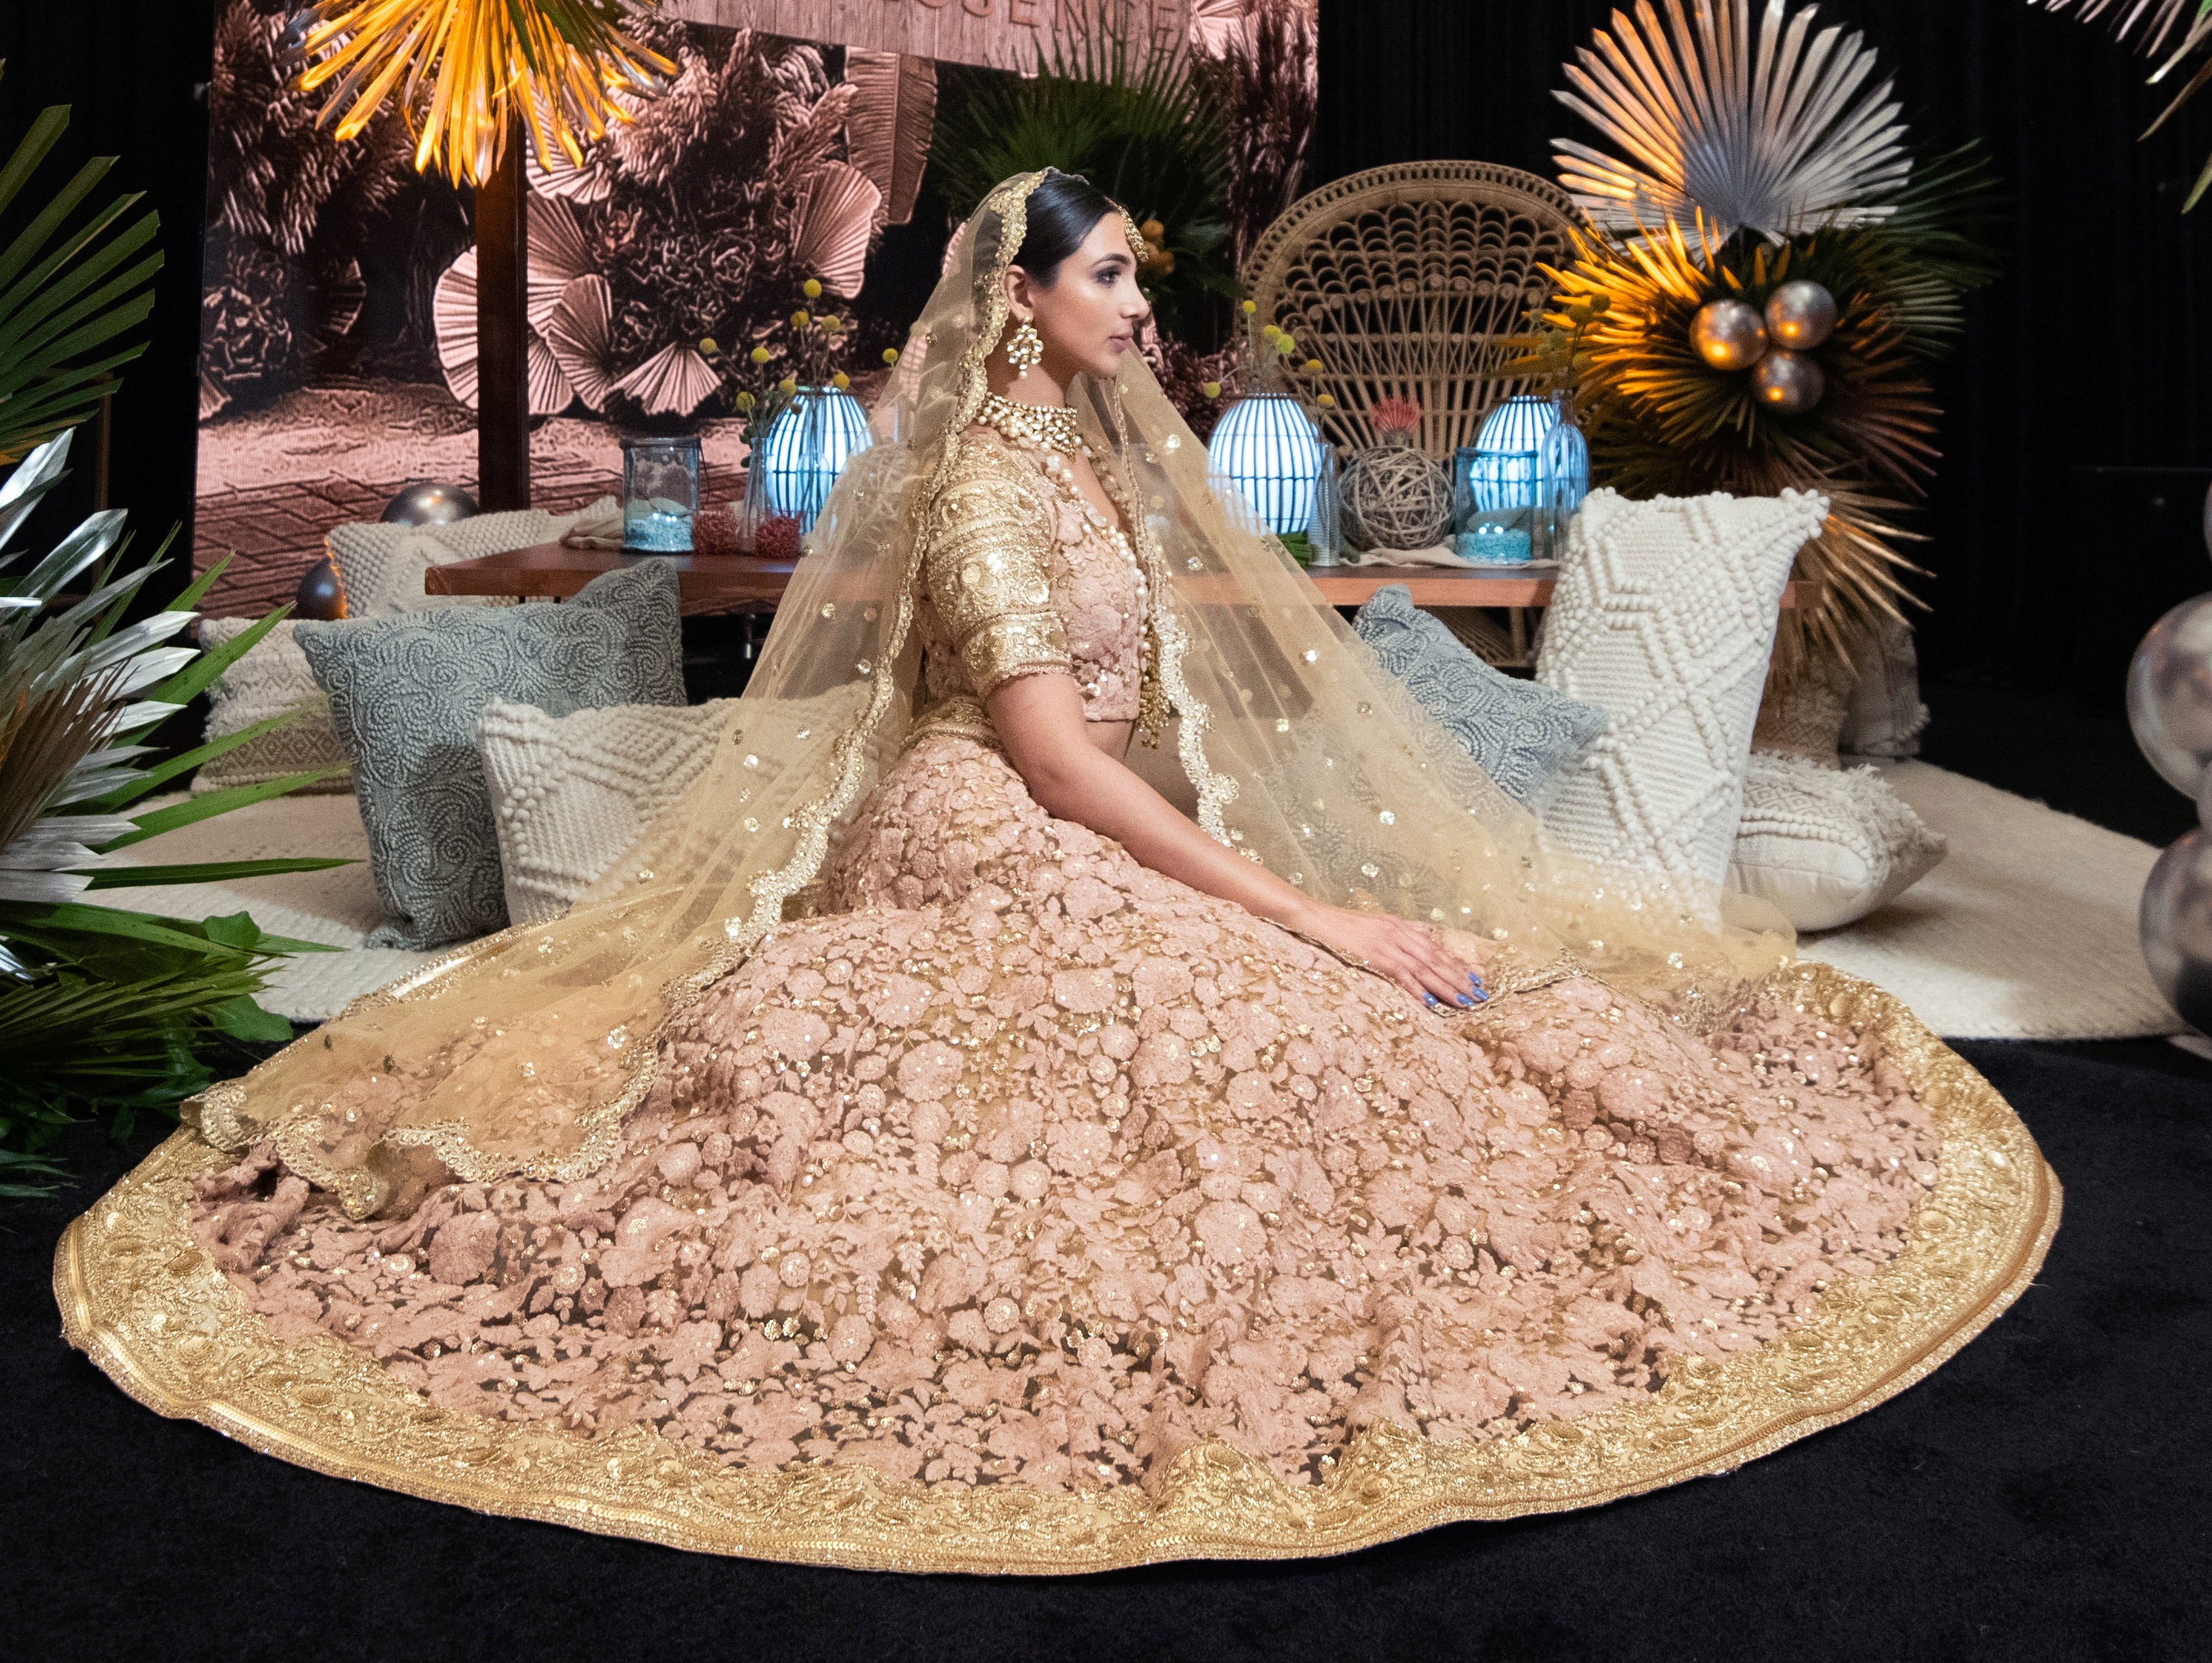 Latest Indian Wedding Dresses Designs For Ladies